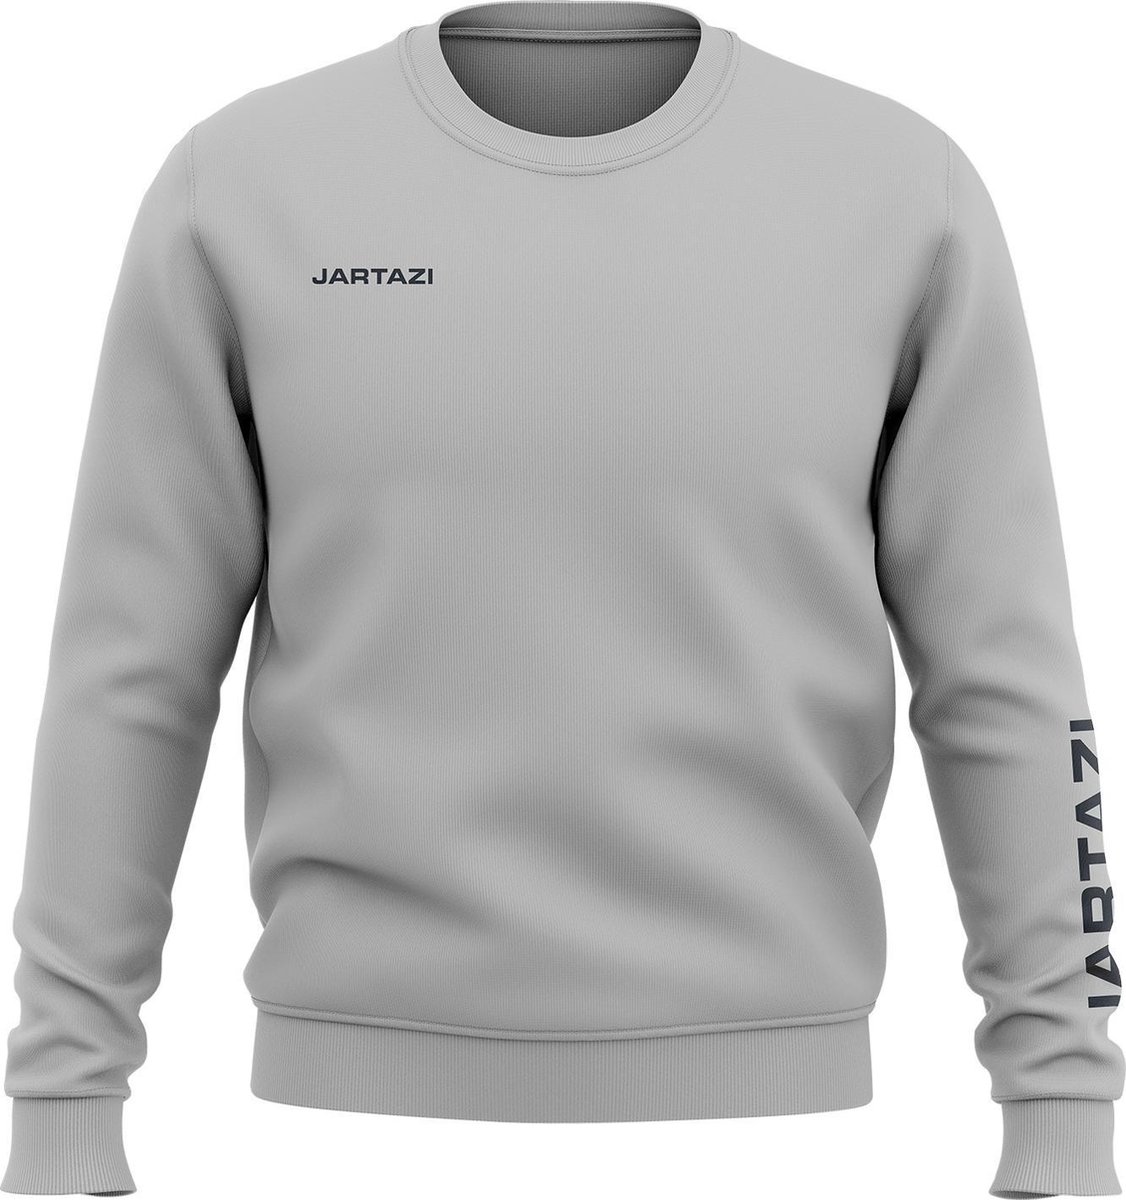 Jartazi Sweater Premium Crewneck Katoen/polyester Grijs Maat Xxs